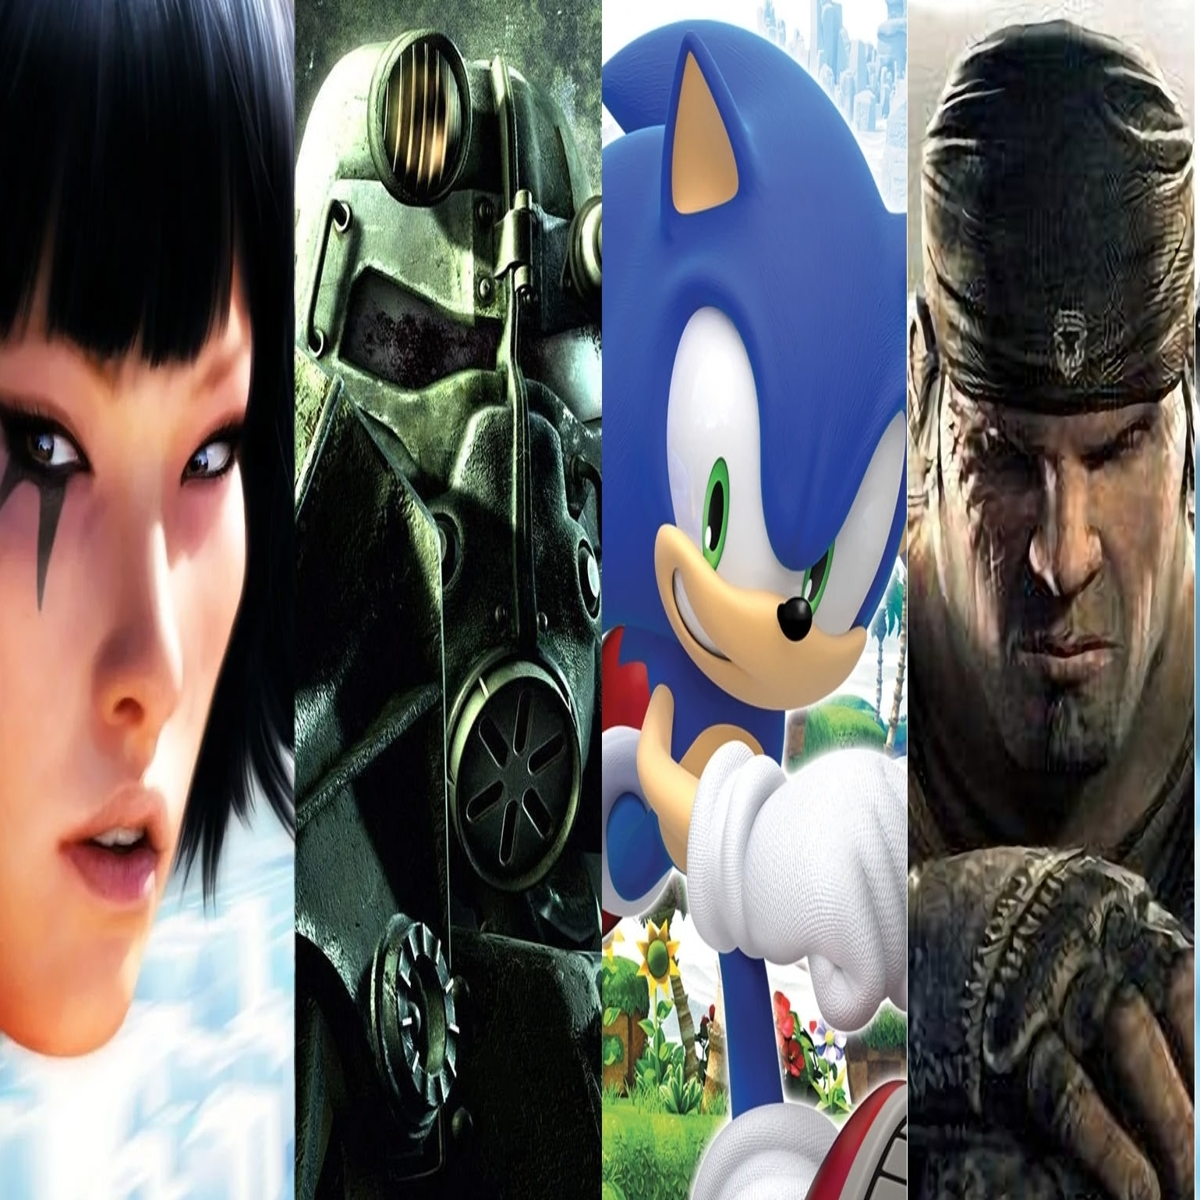 Sonic Unleashed - Classics Edition (Xbox 360) 